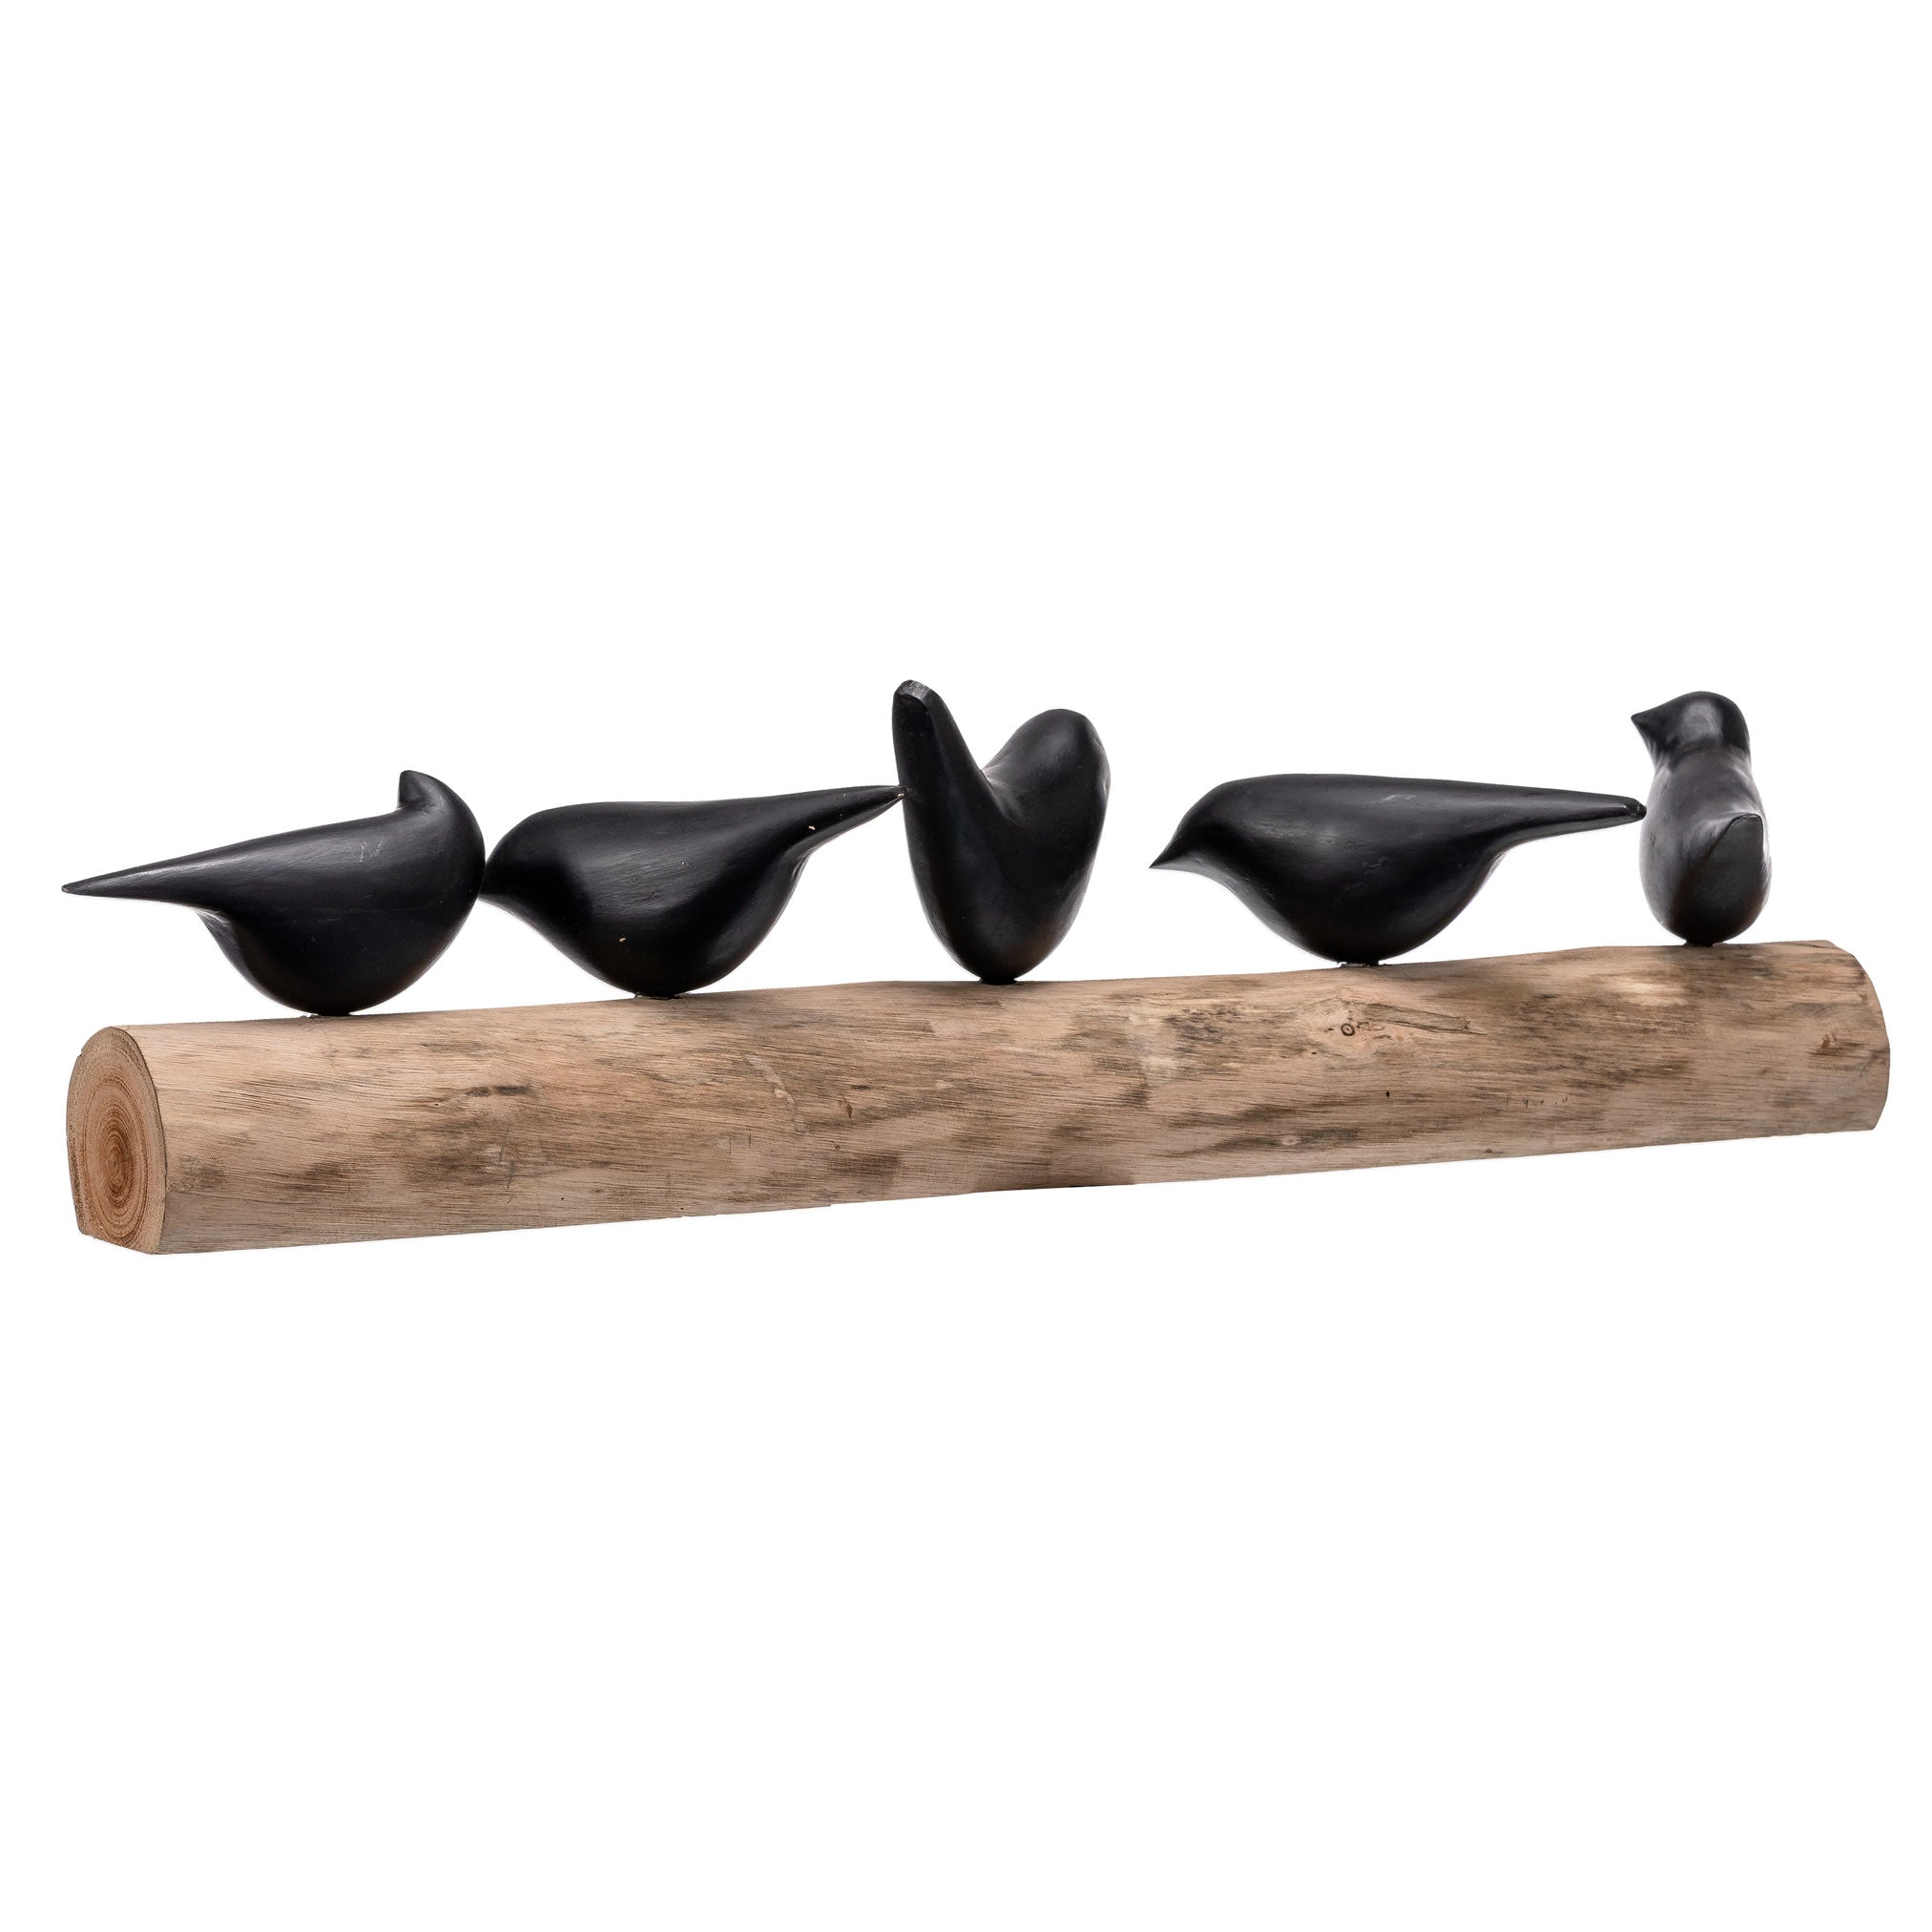 5 Birds Sitting On Log - Black